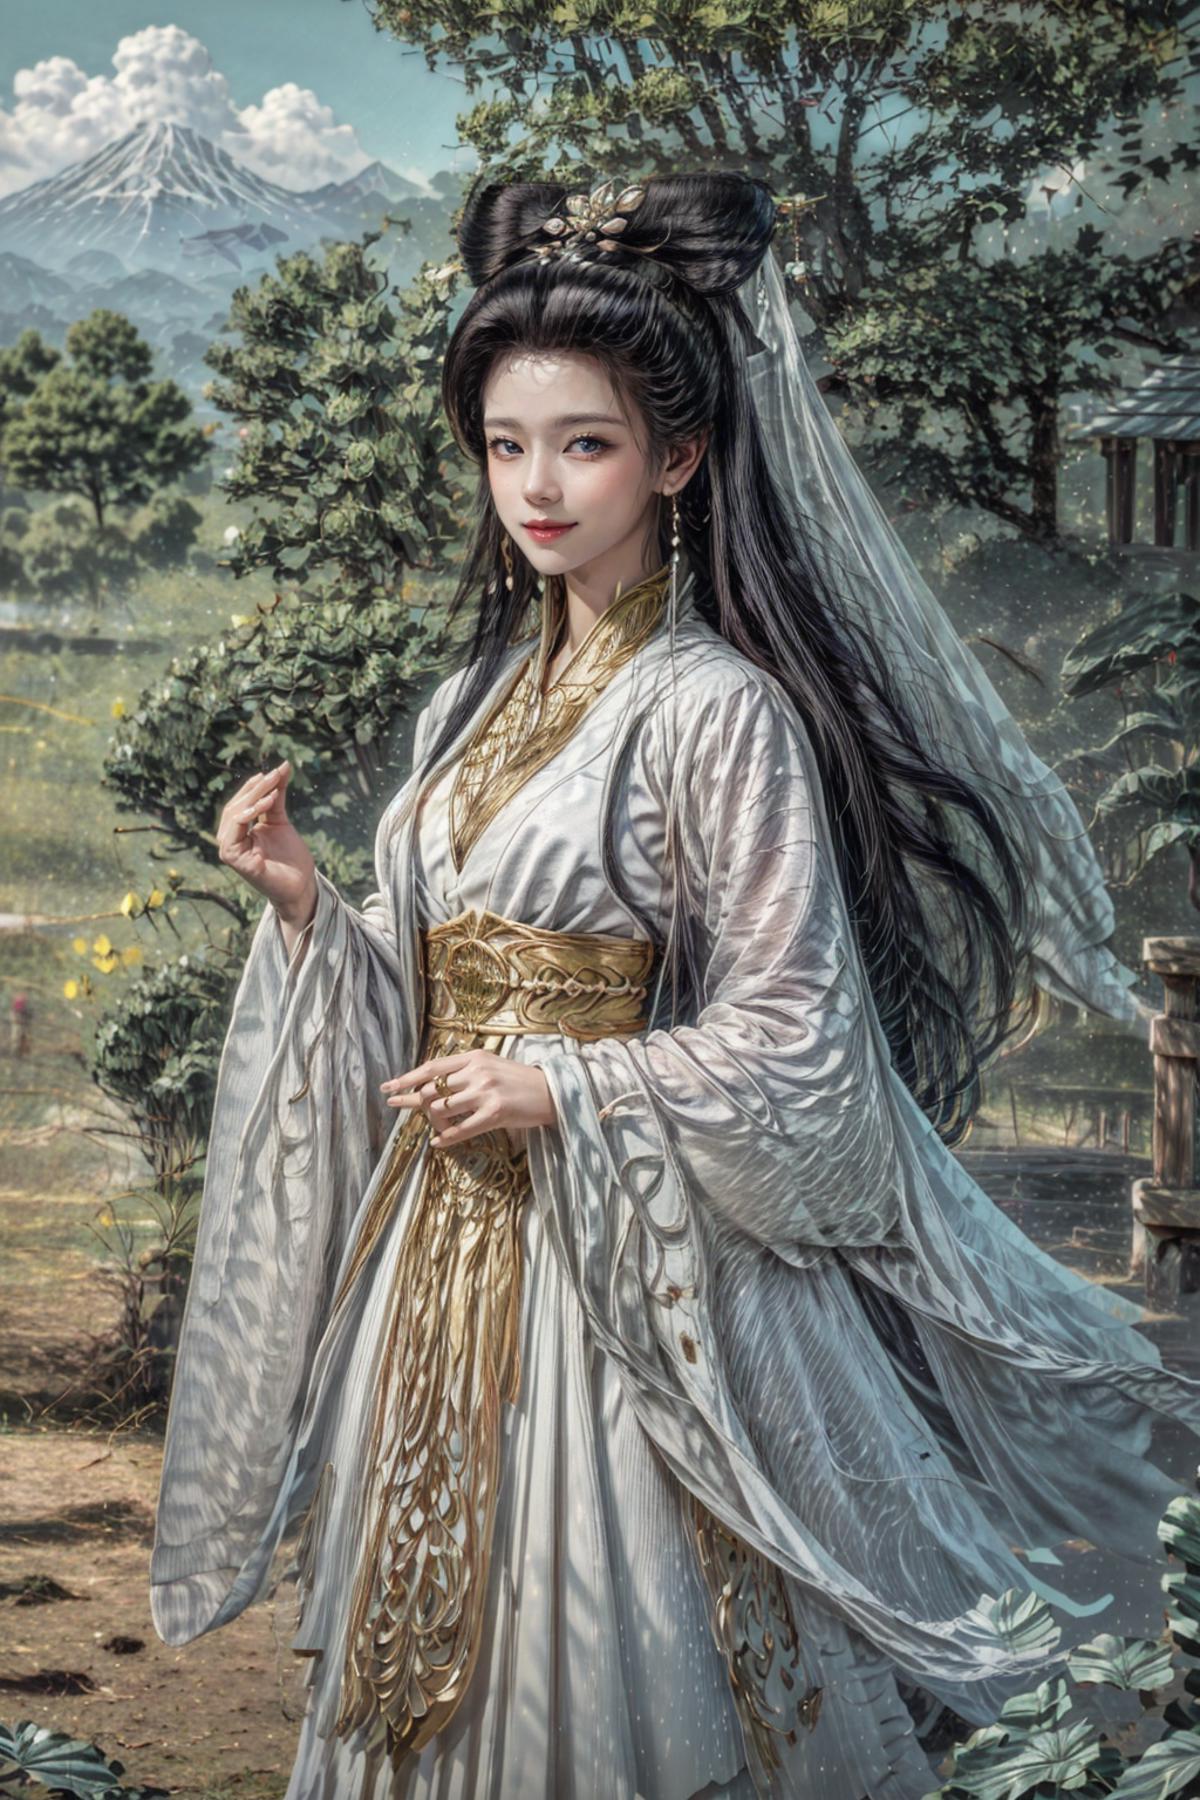 白素贞 Bai Suzhen | 白蛇传 Legend of the White Snake | 中国神话系列 Chinese mythology image by yoyochen2023